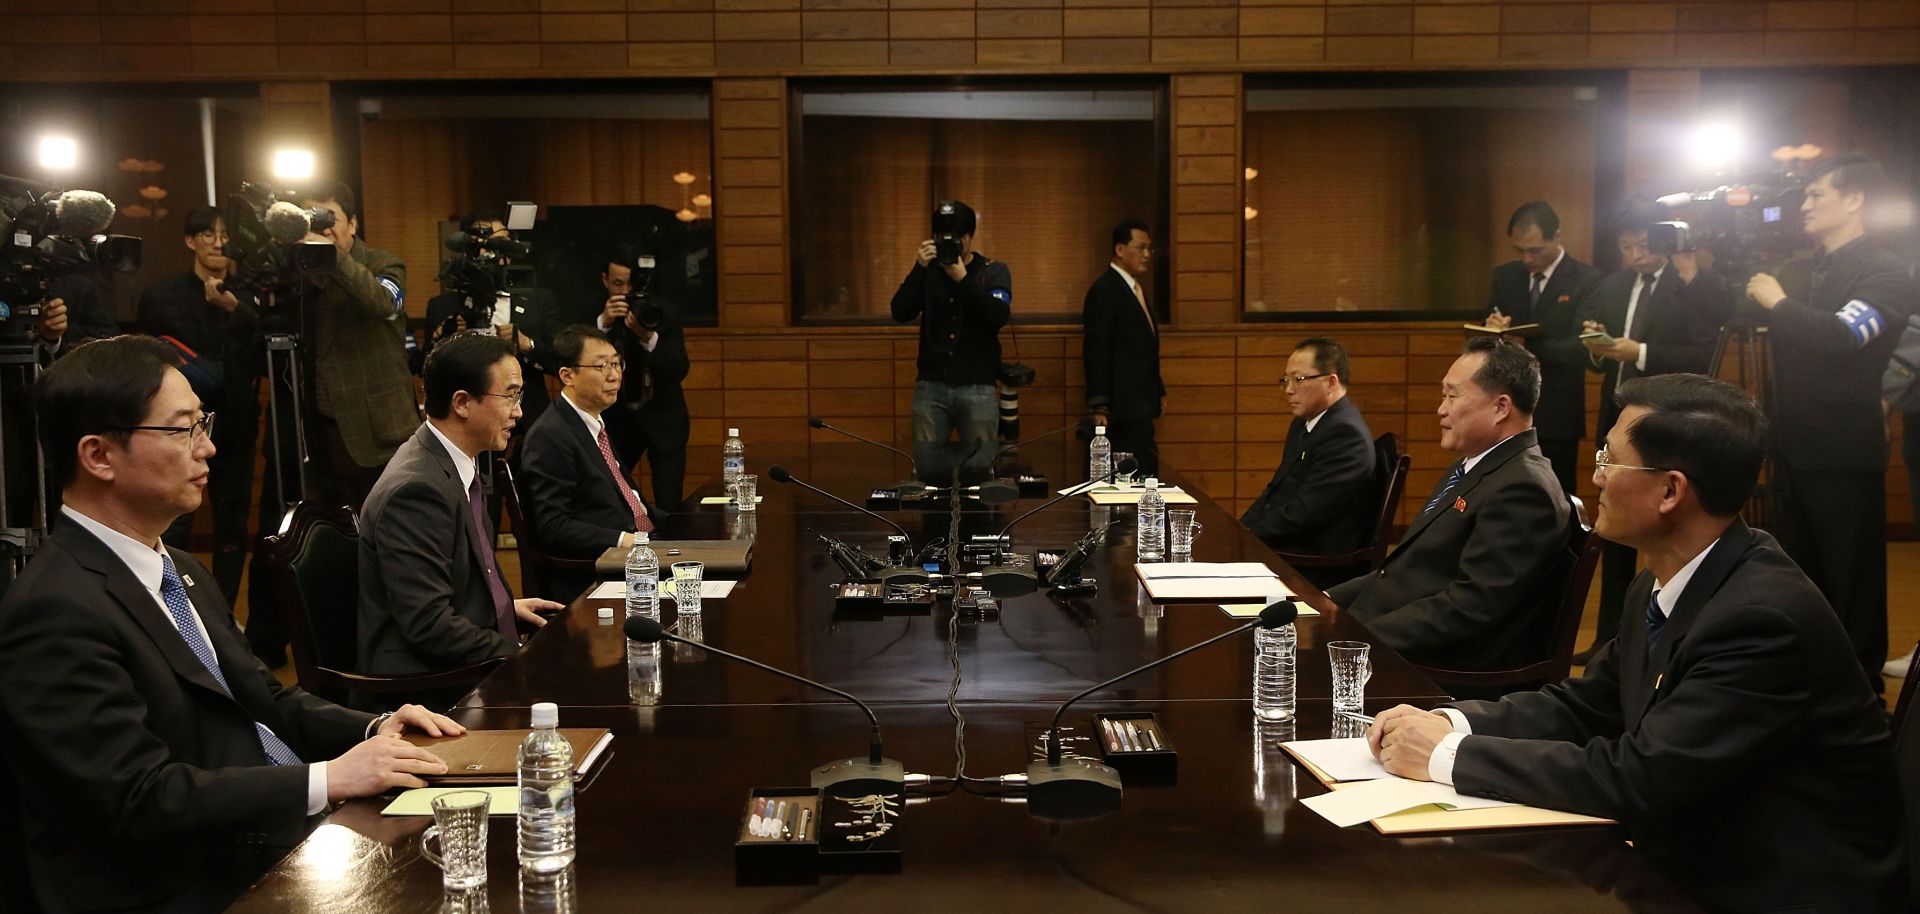 Talks prior to the inter-Korean summit